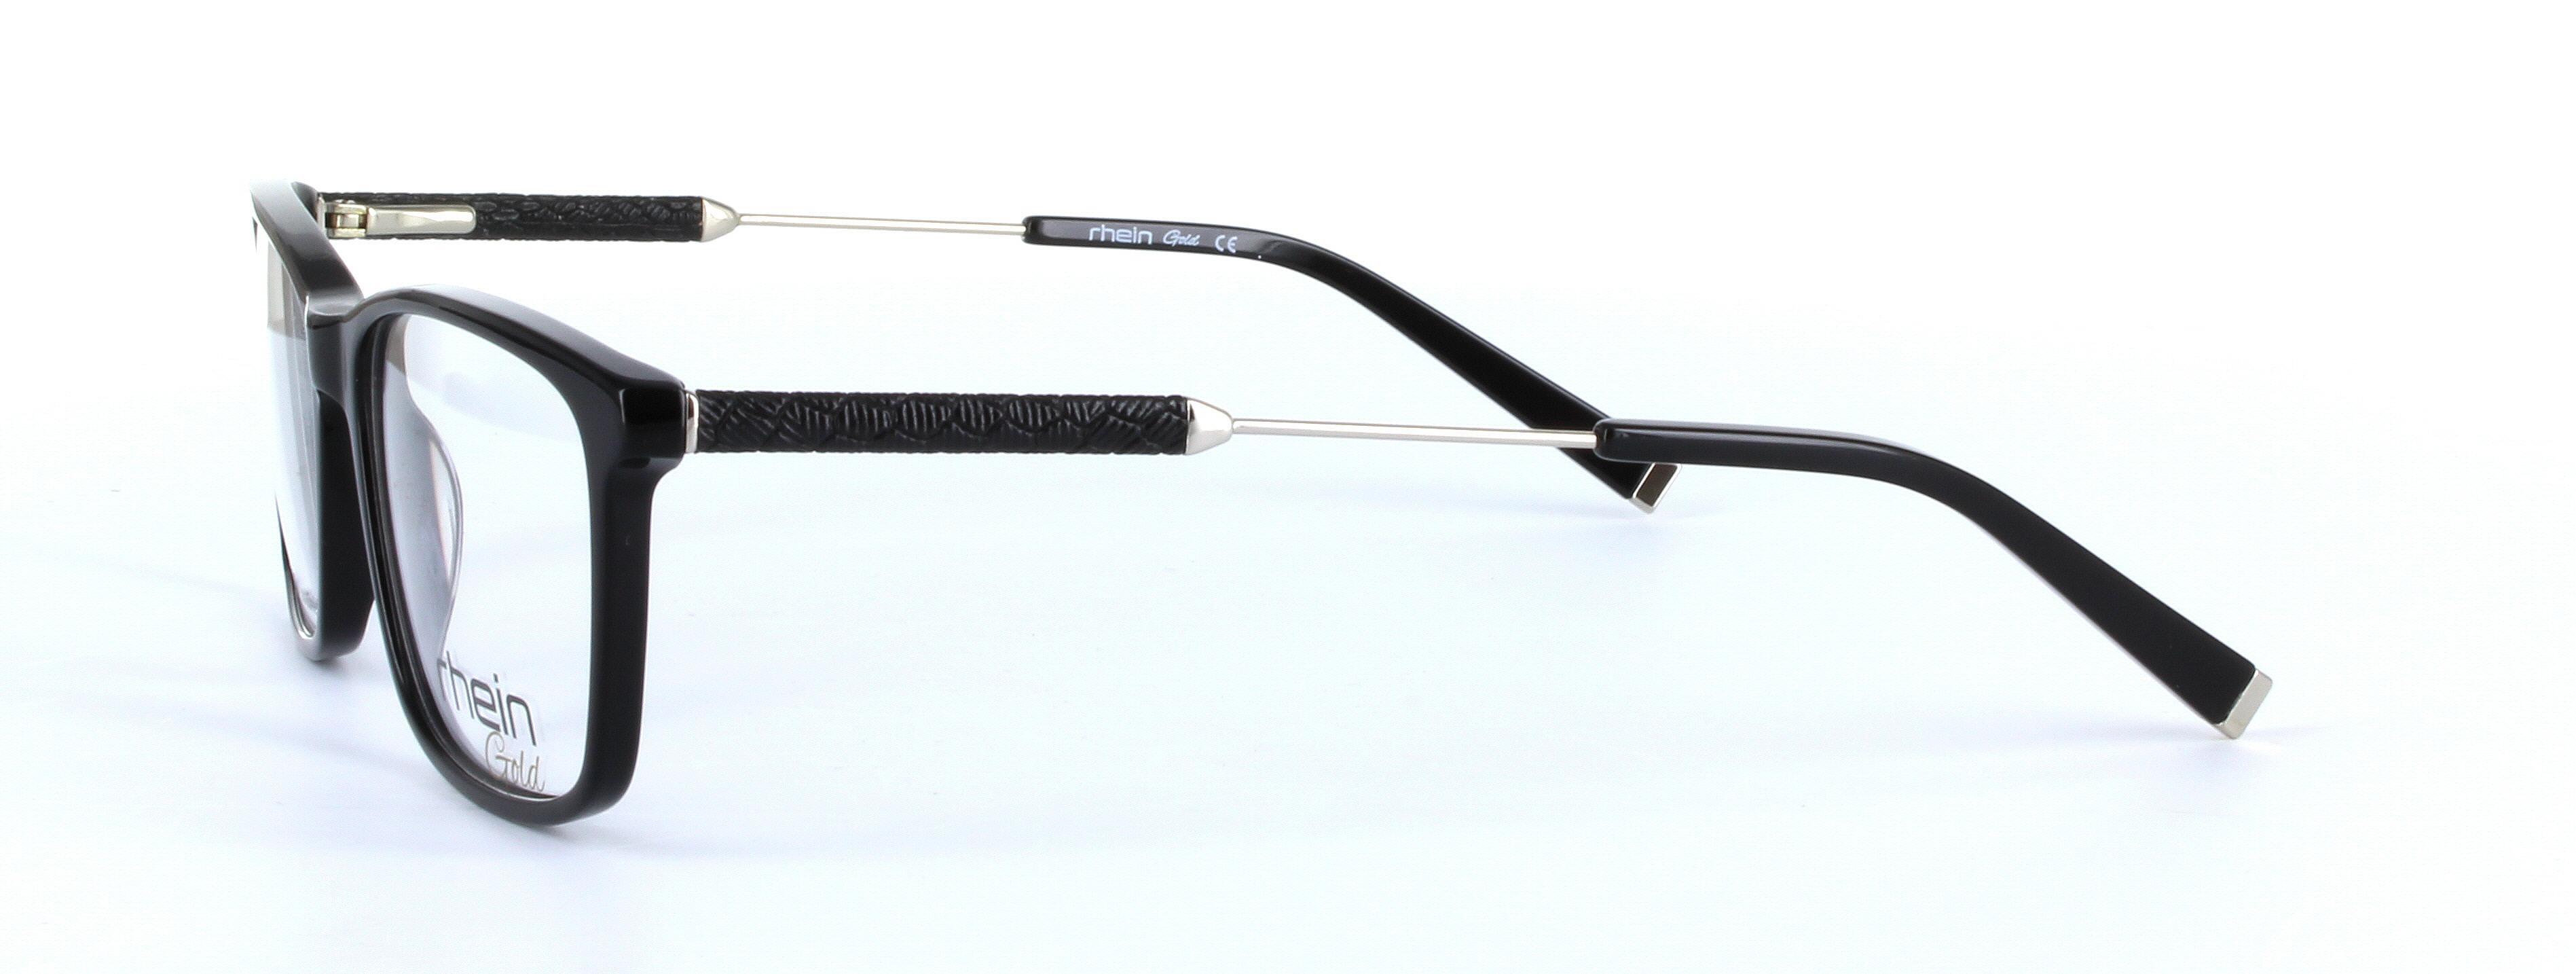 Durham Black Full Rim Oval Rectangular Plastic Glasses - Image View 2